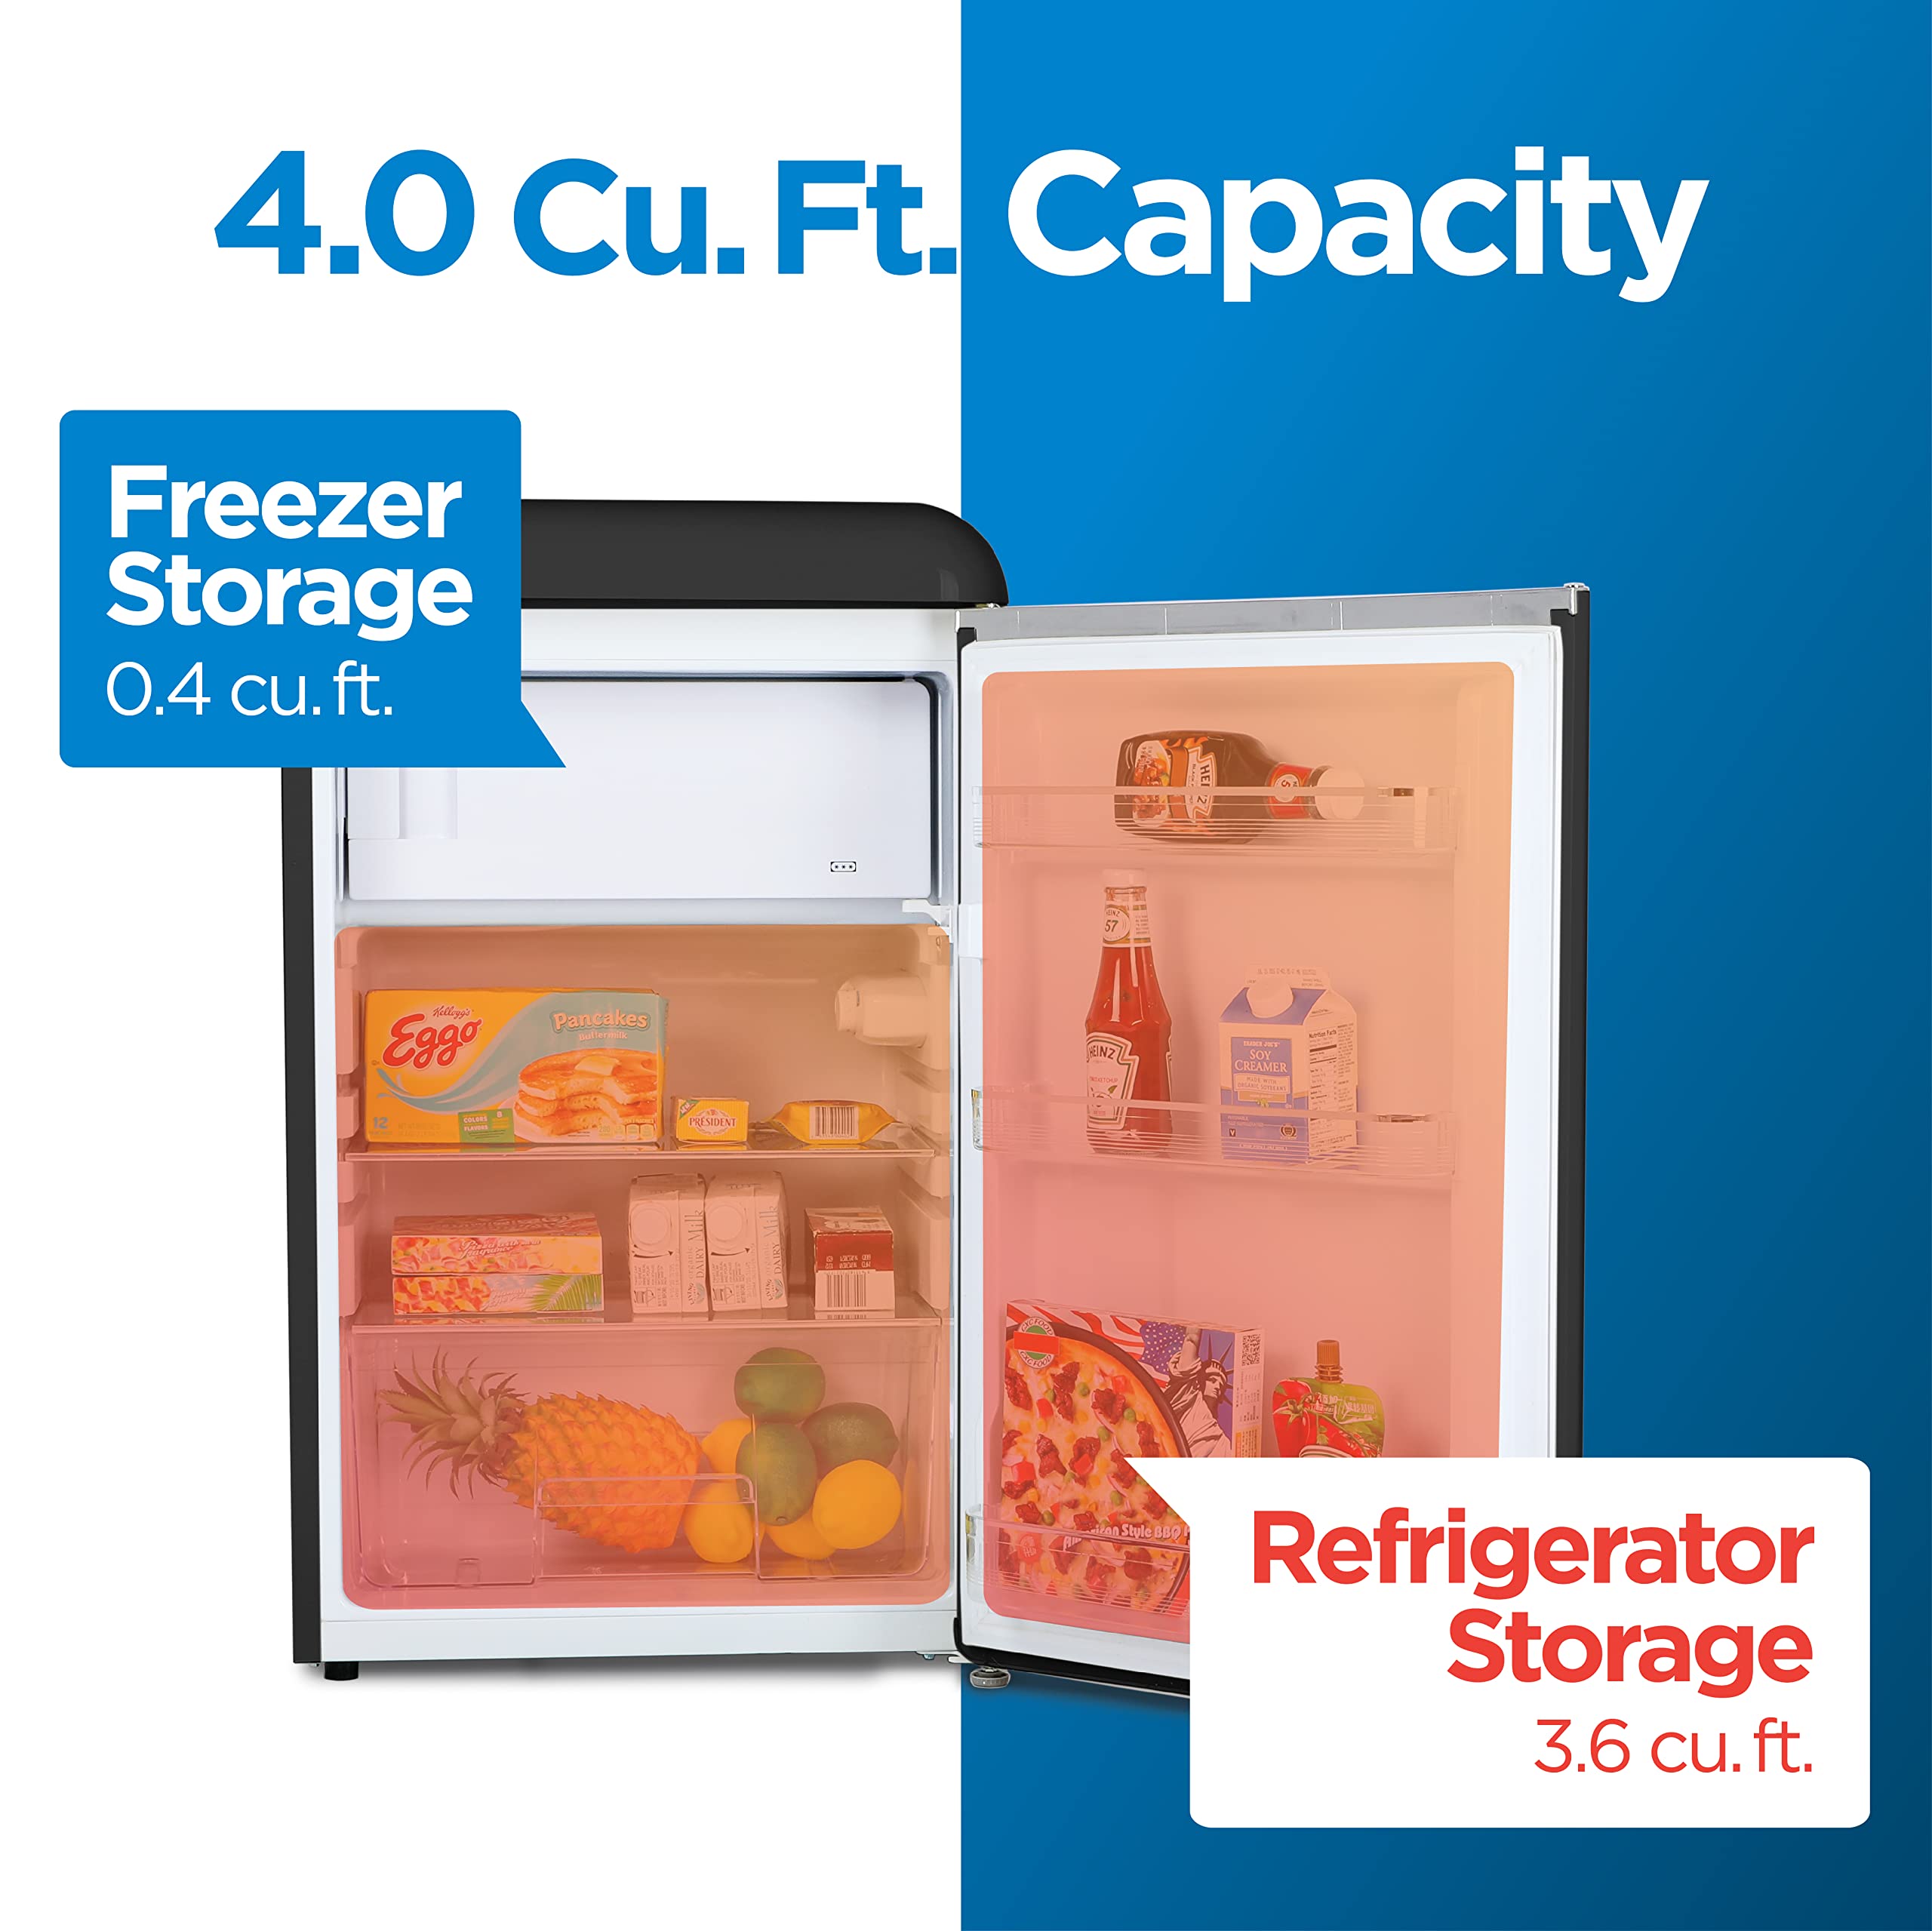 Commercial Cool CCRR4LB 4.0 Cu. Ft Freezer, Vintage Style 1 Slide-Out Glass Shelf and Crisper Cover, Retro Fridge,Black Refrigerator